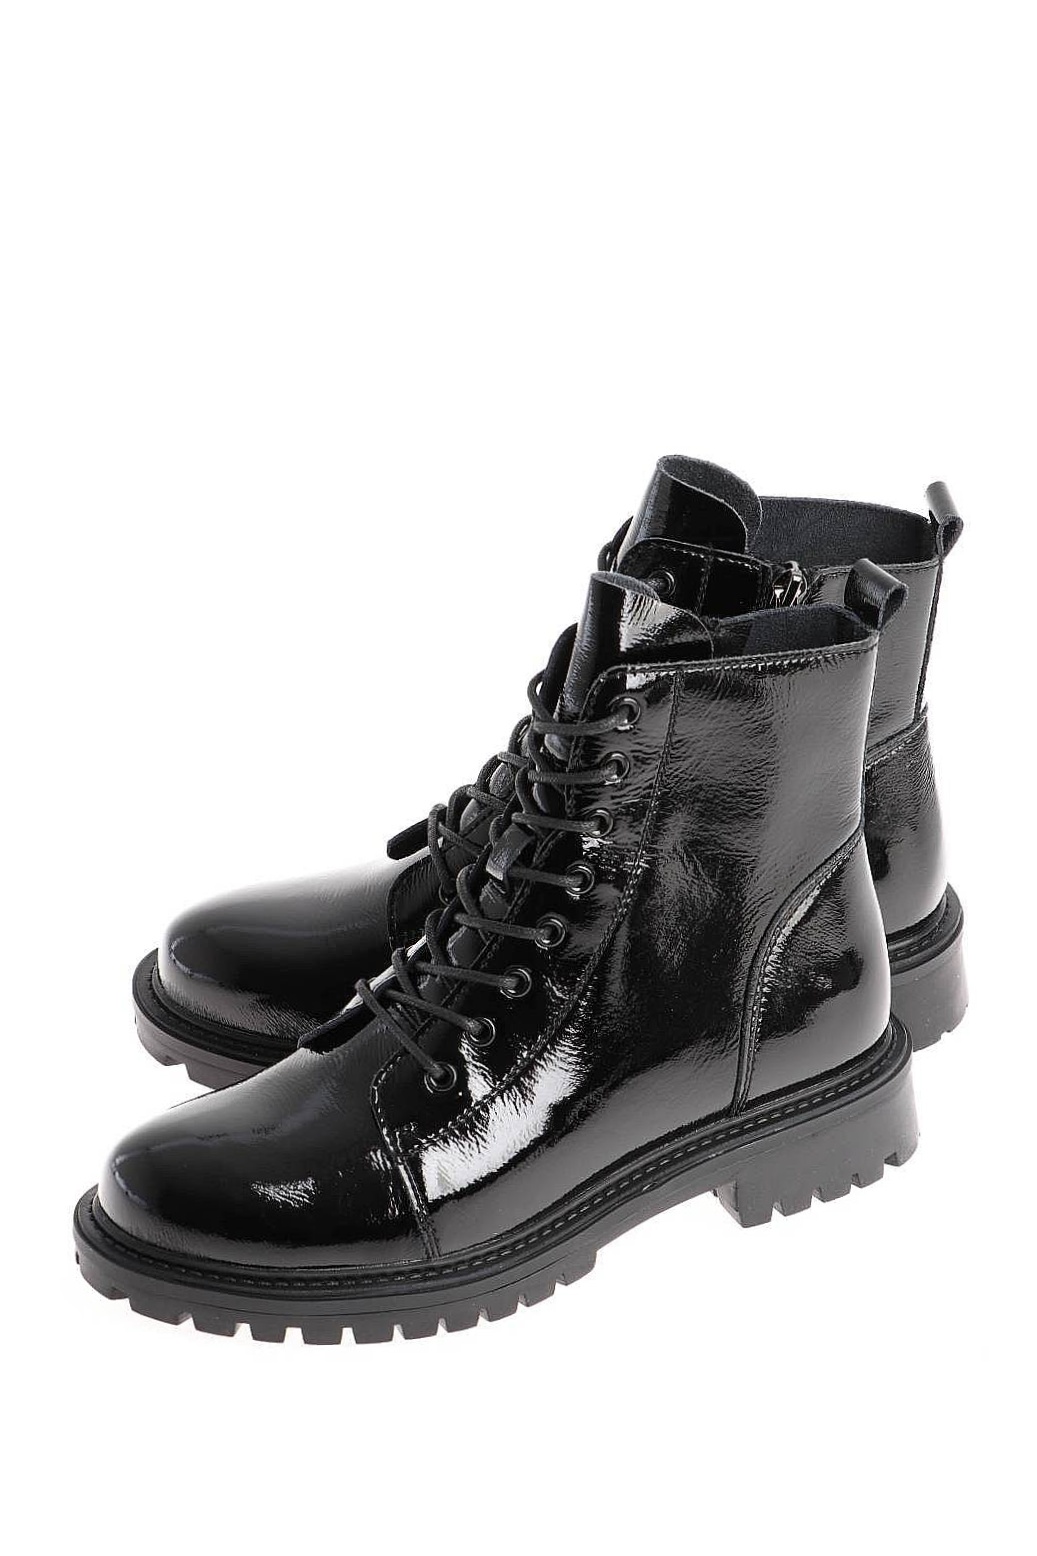 Ботинки женские Benetti RQ178-051 черные 40 RU